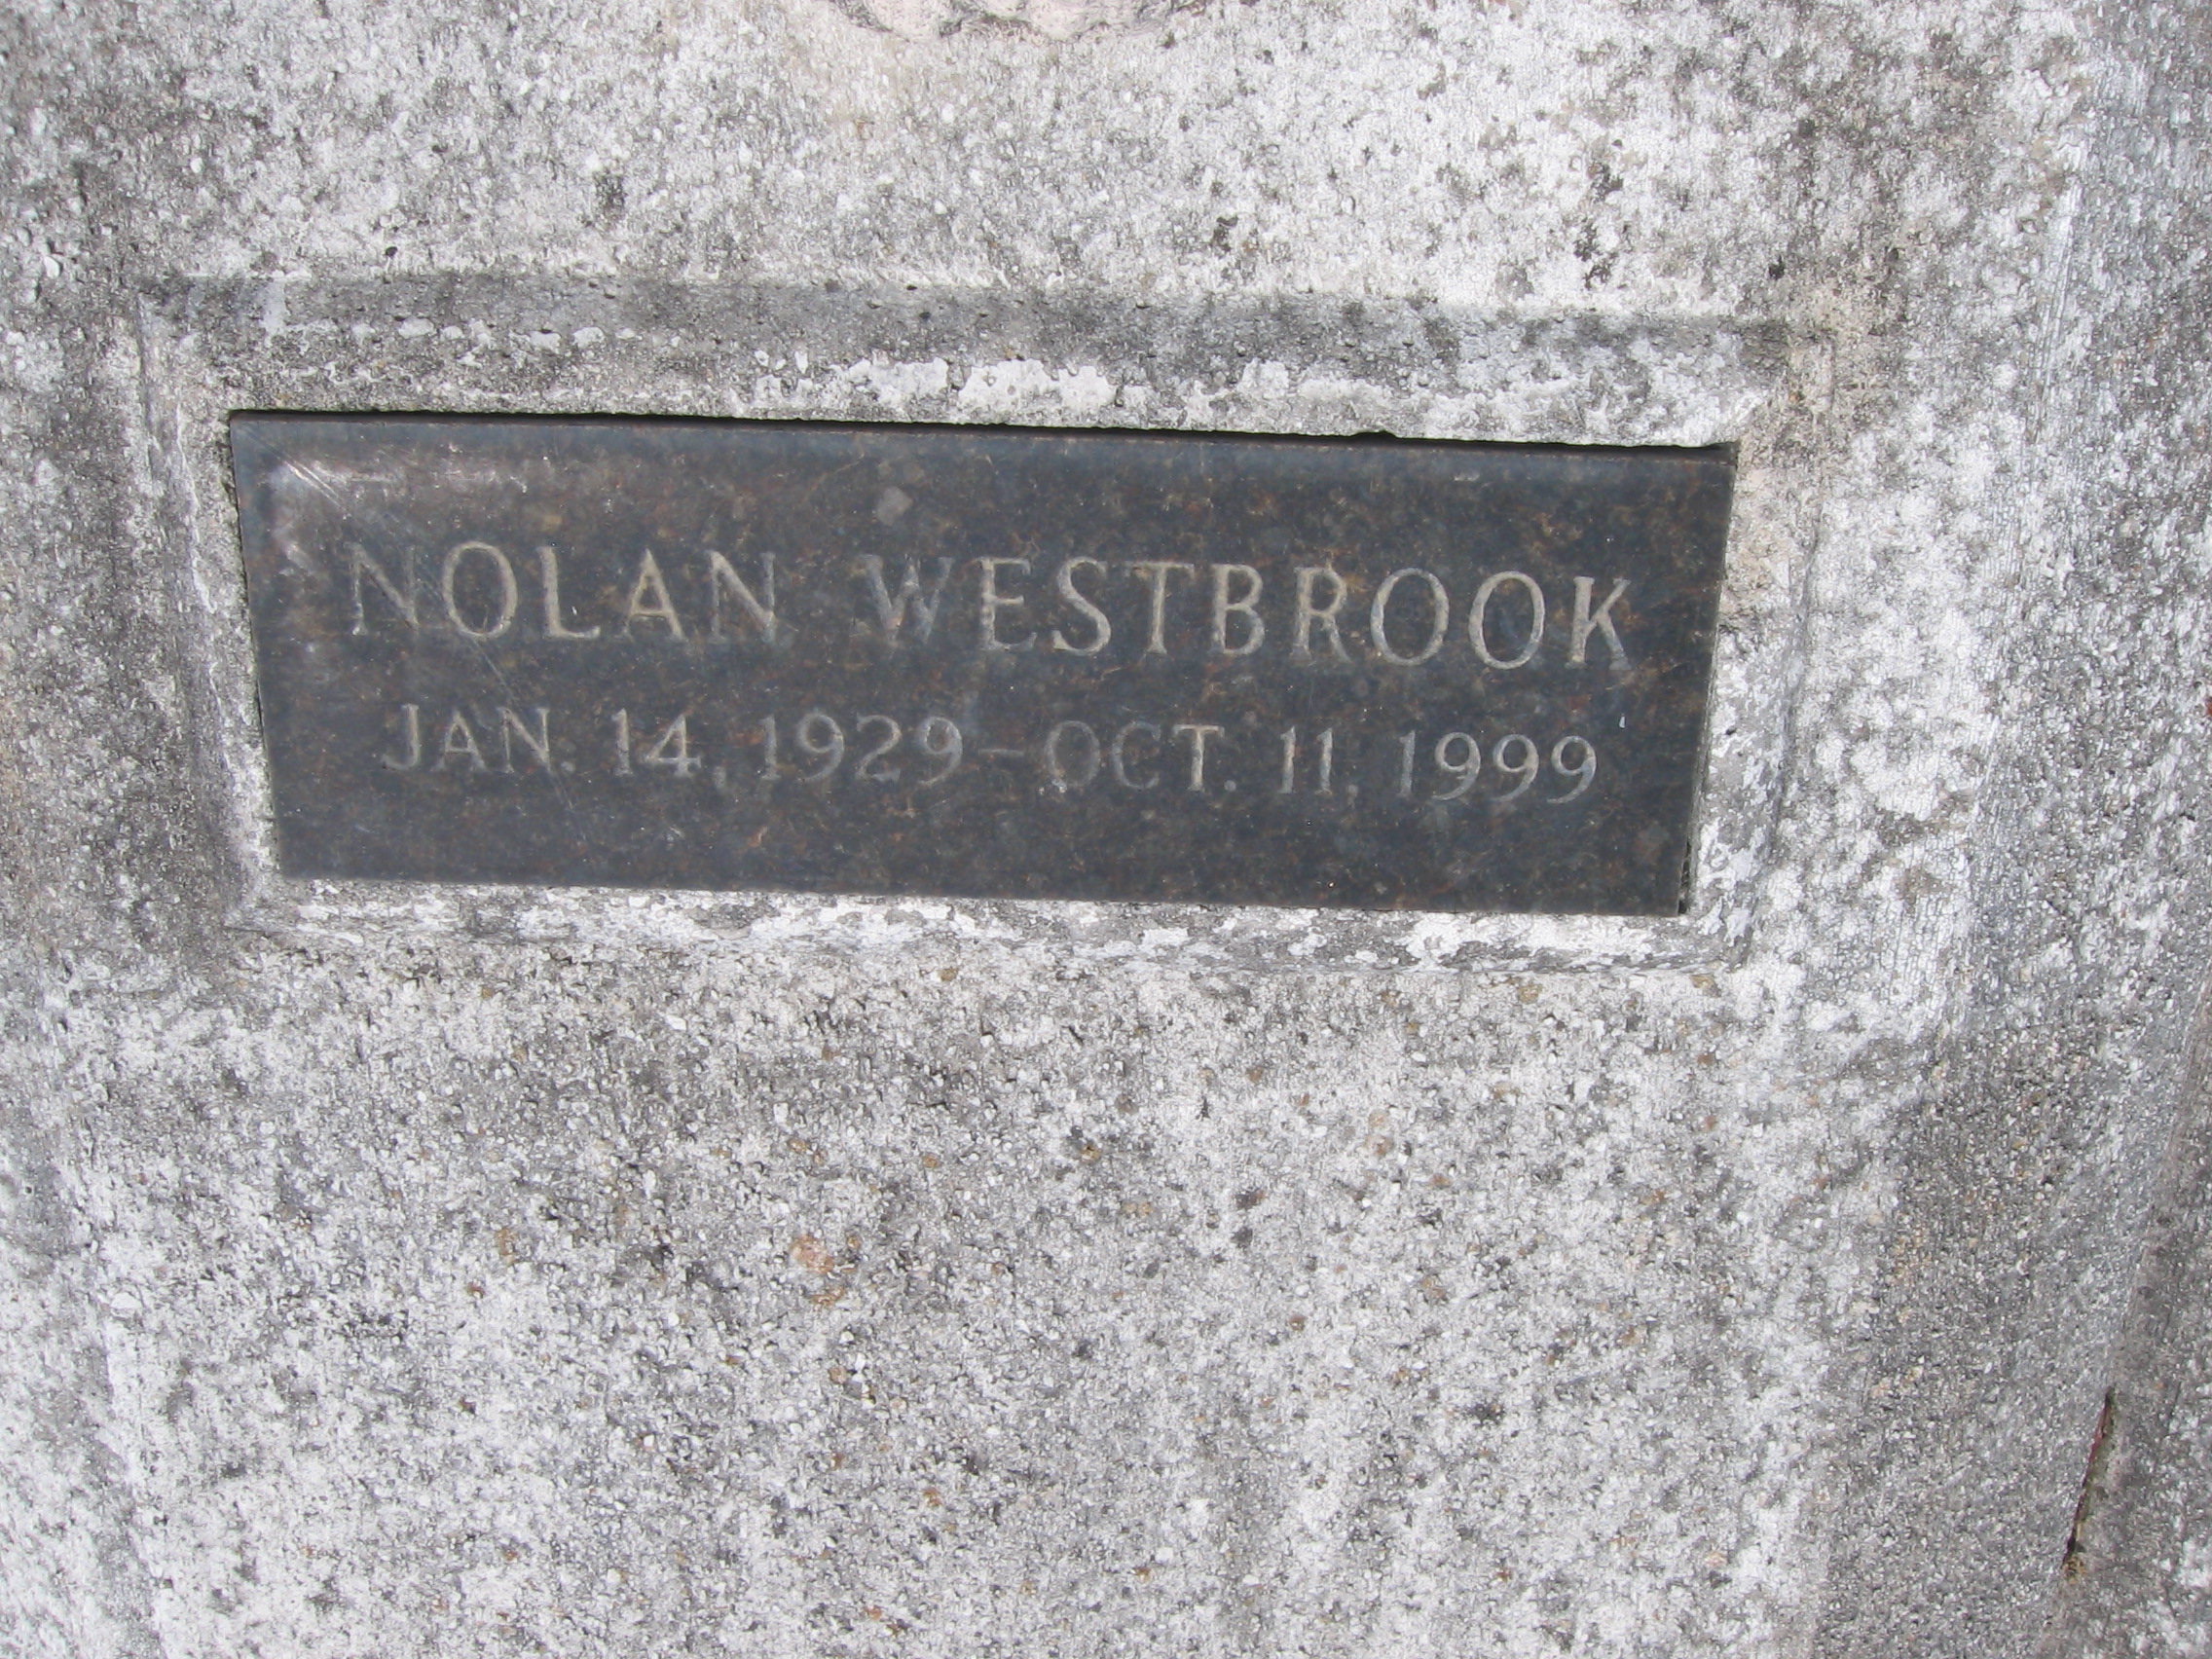 Nolan Westbrook